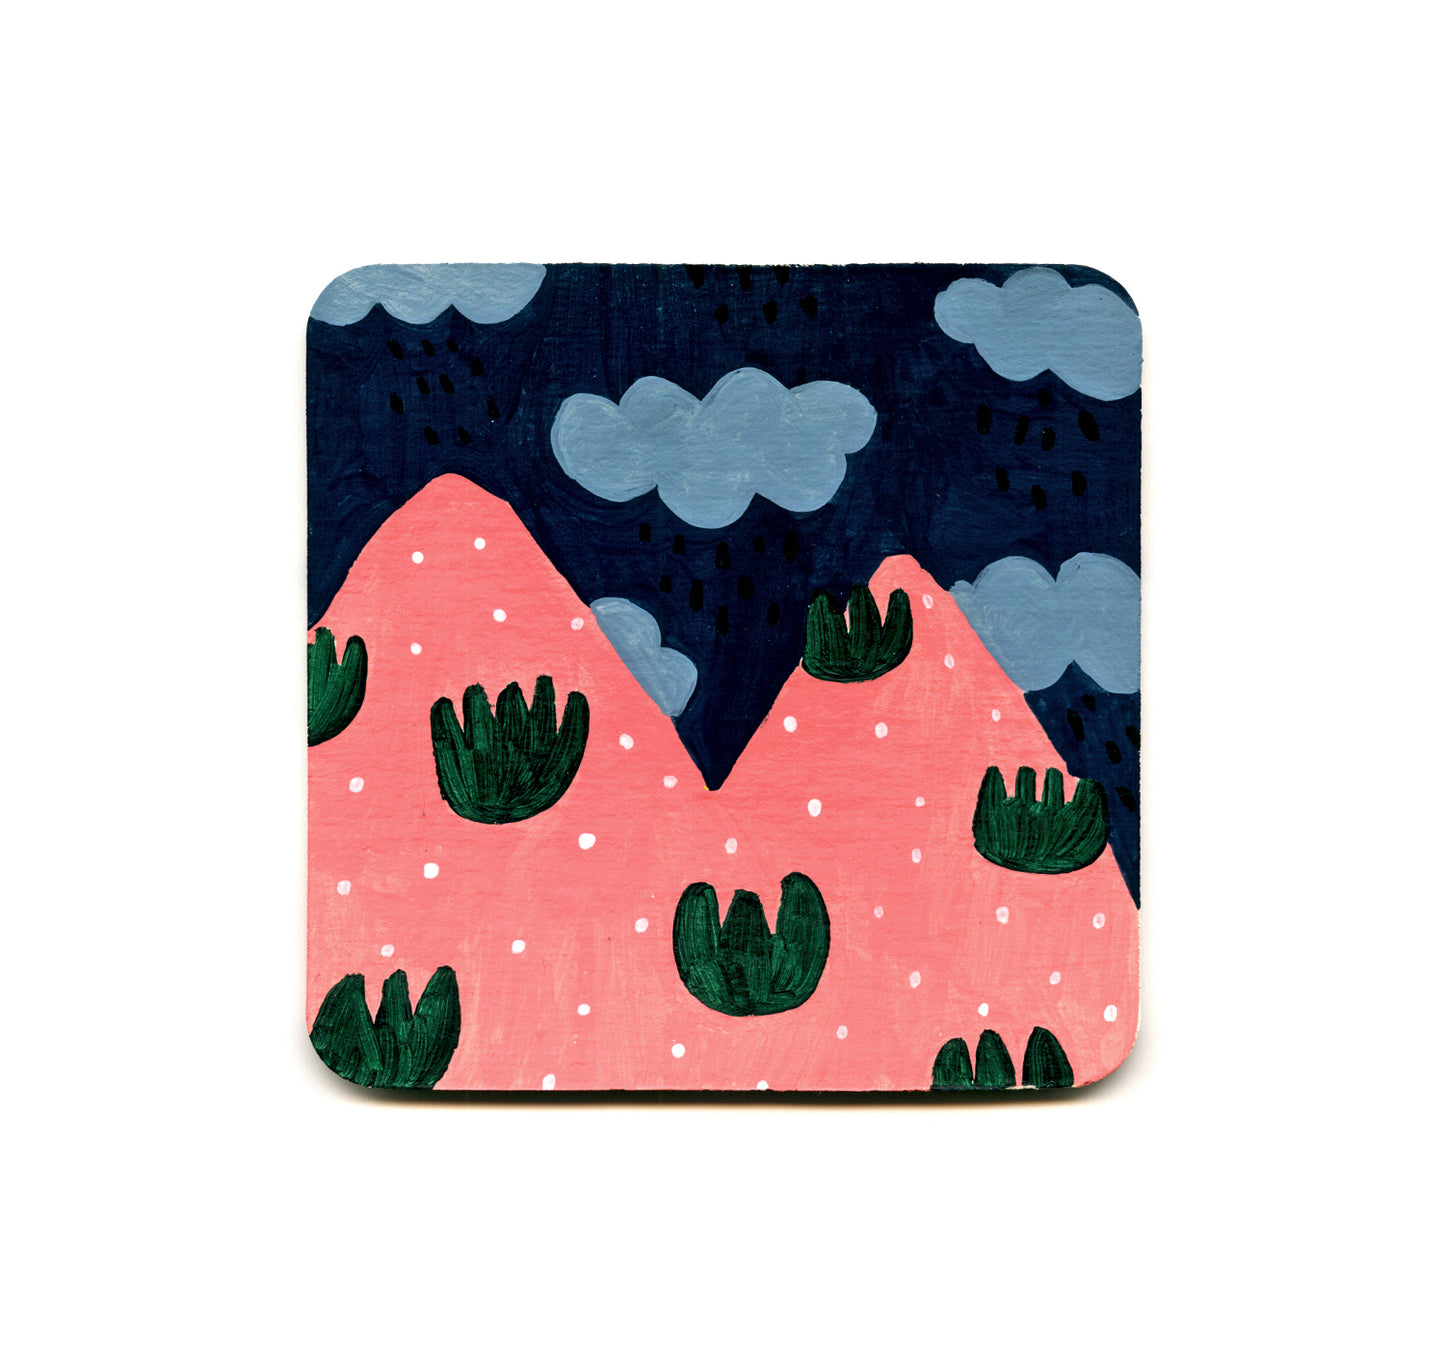 S2 Jennifer Bouron - Pink Mountains Coaster